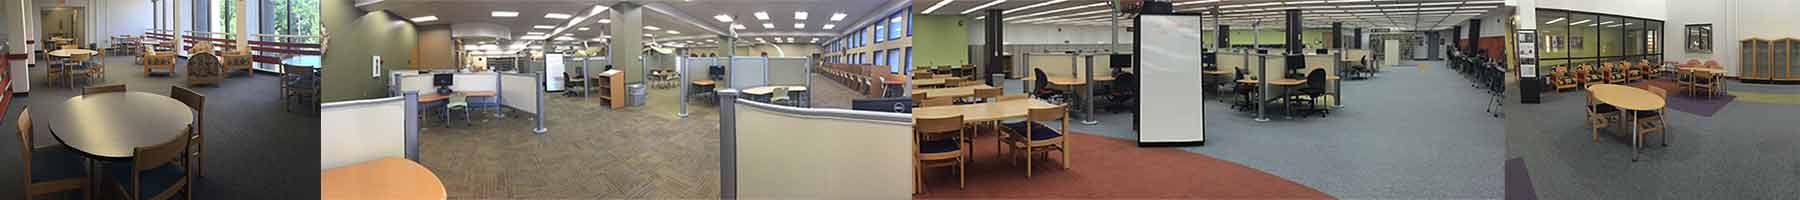 Zuhl Library Study Rooms Tamu Nmsu Library